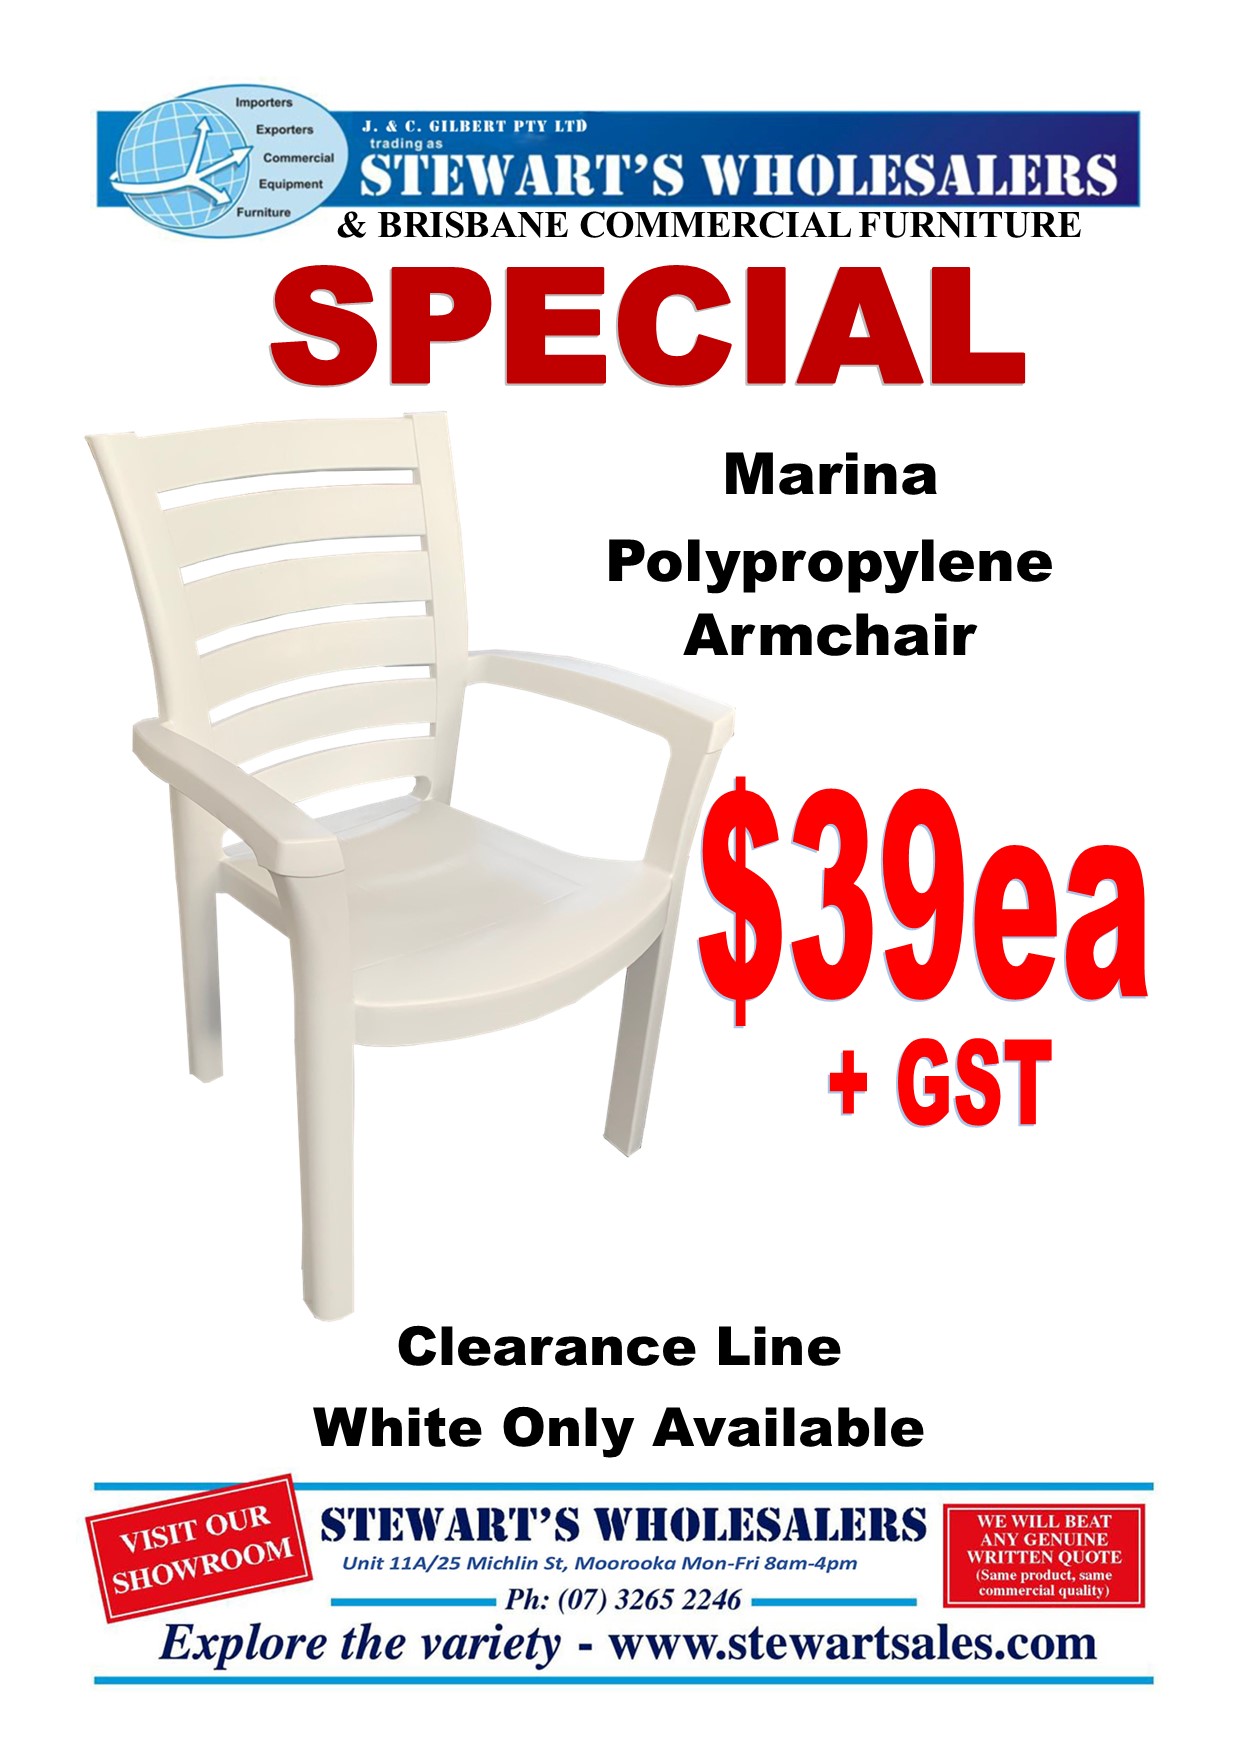 Special_Marina_Clearance_Chair.jpg